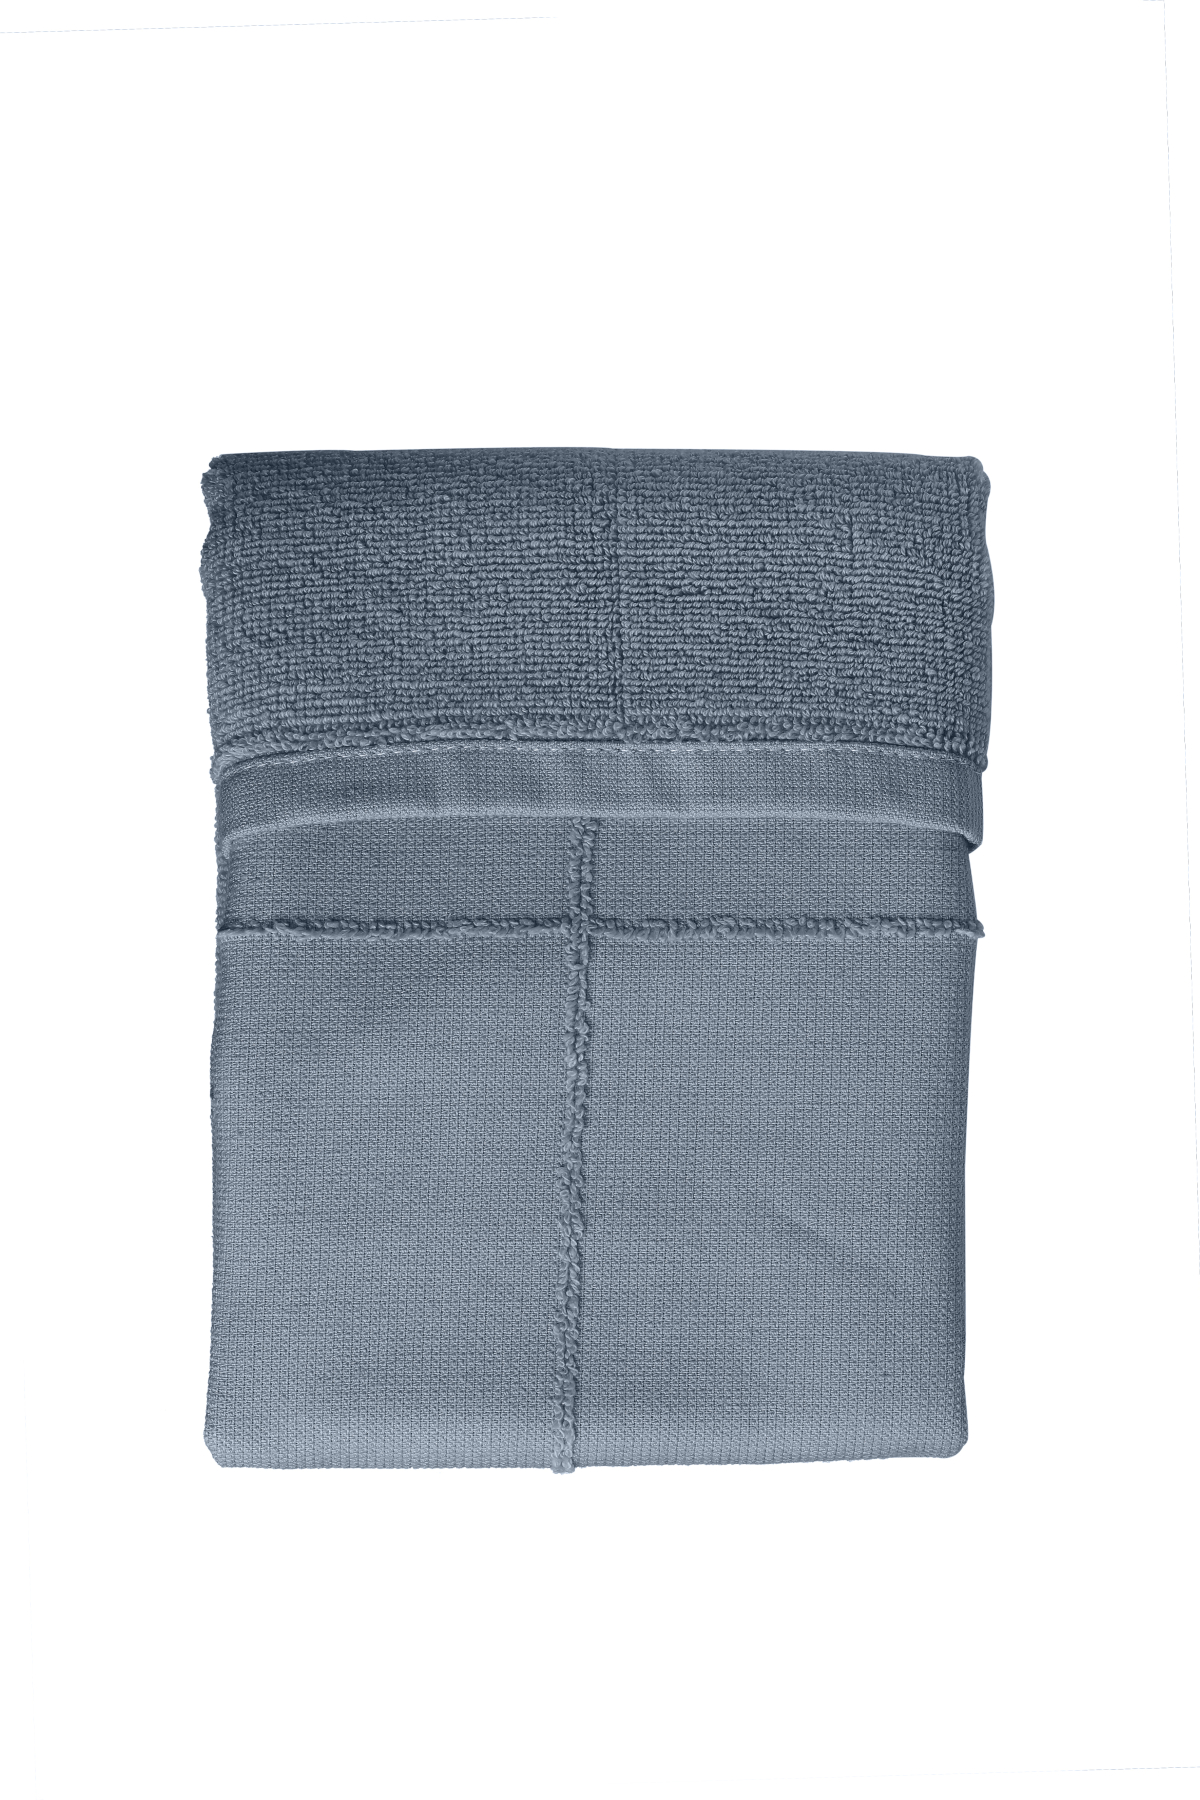 The Organic Company Calm Hand Towel Grey Blue 1